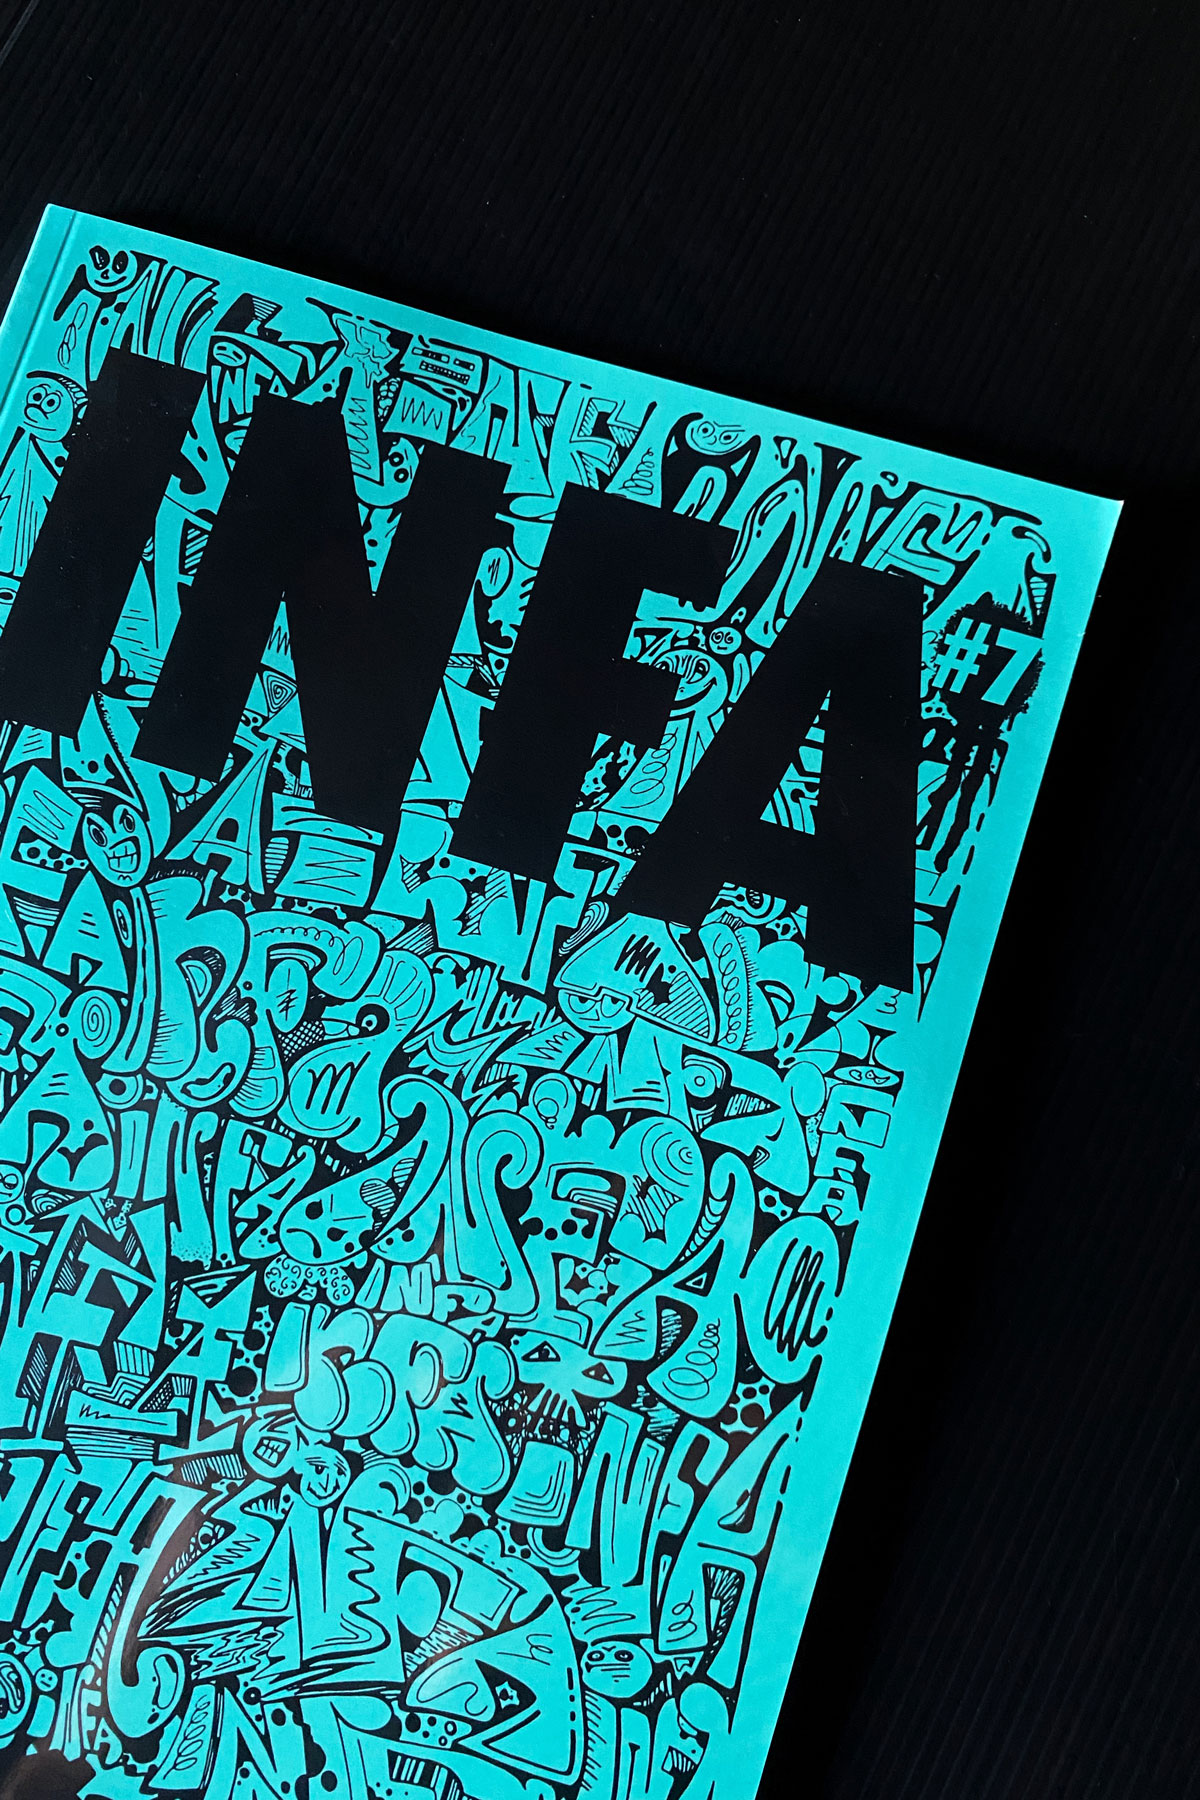 INFA Magazine 7